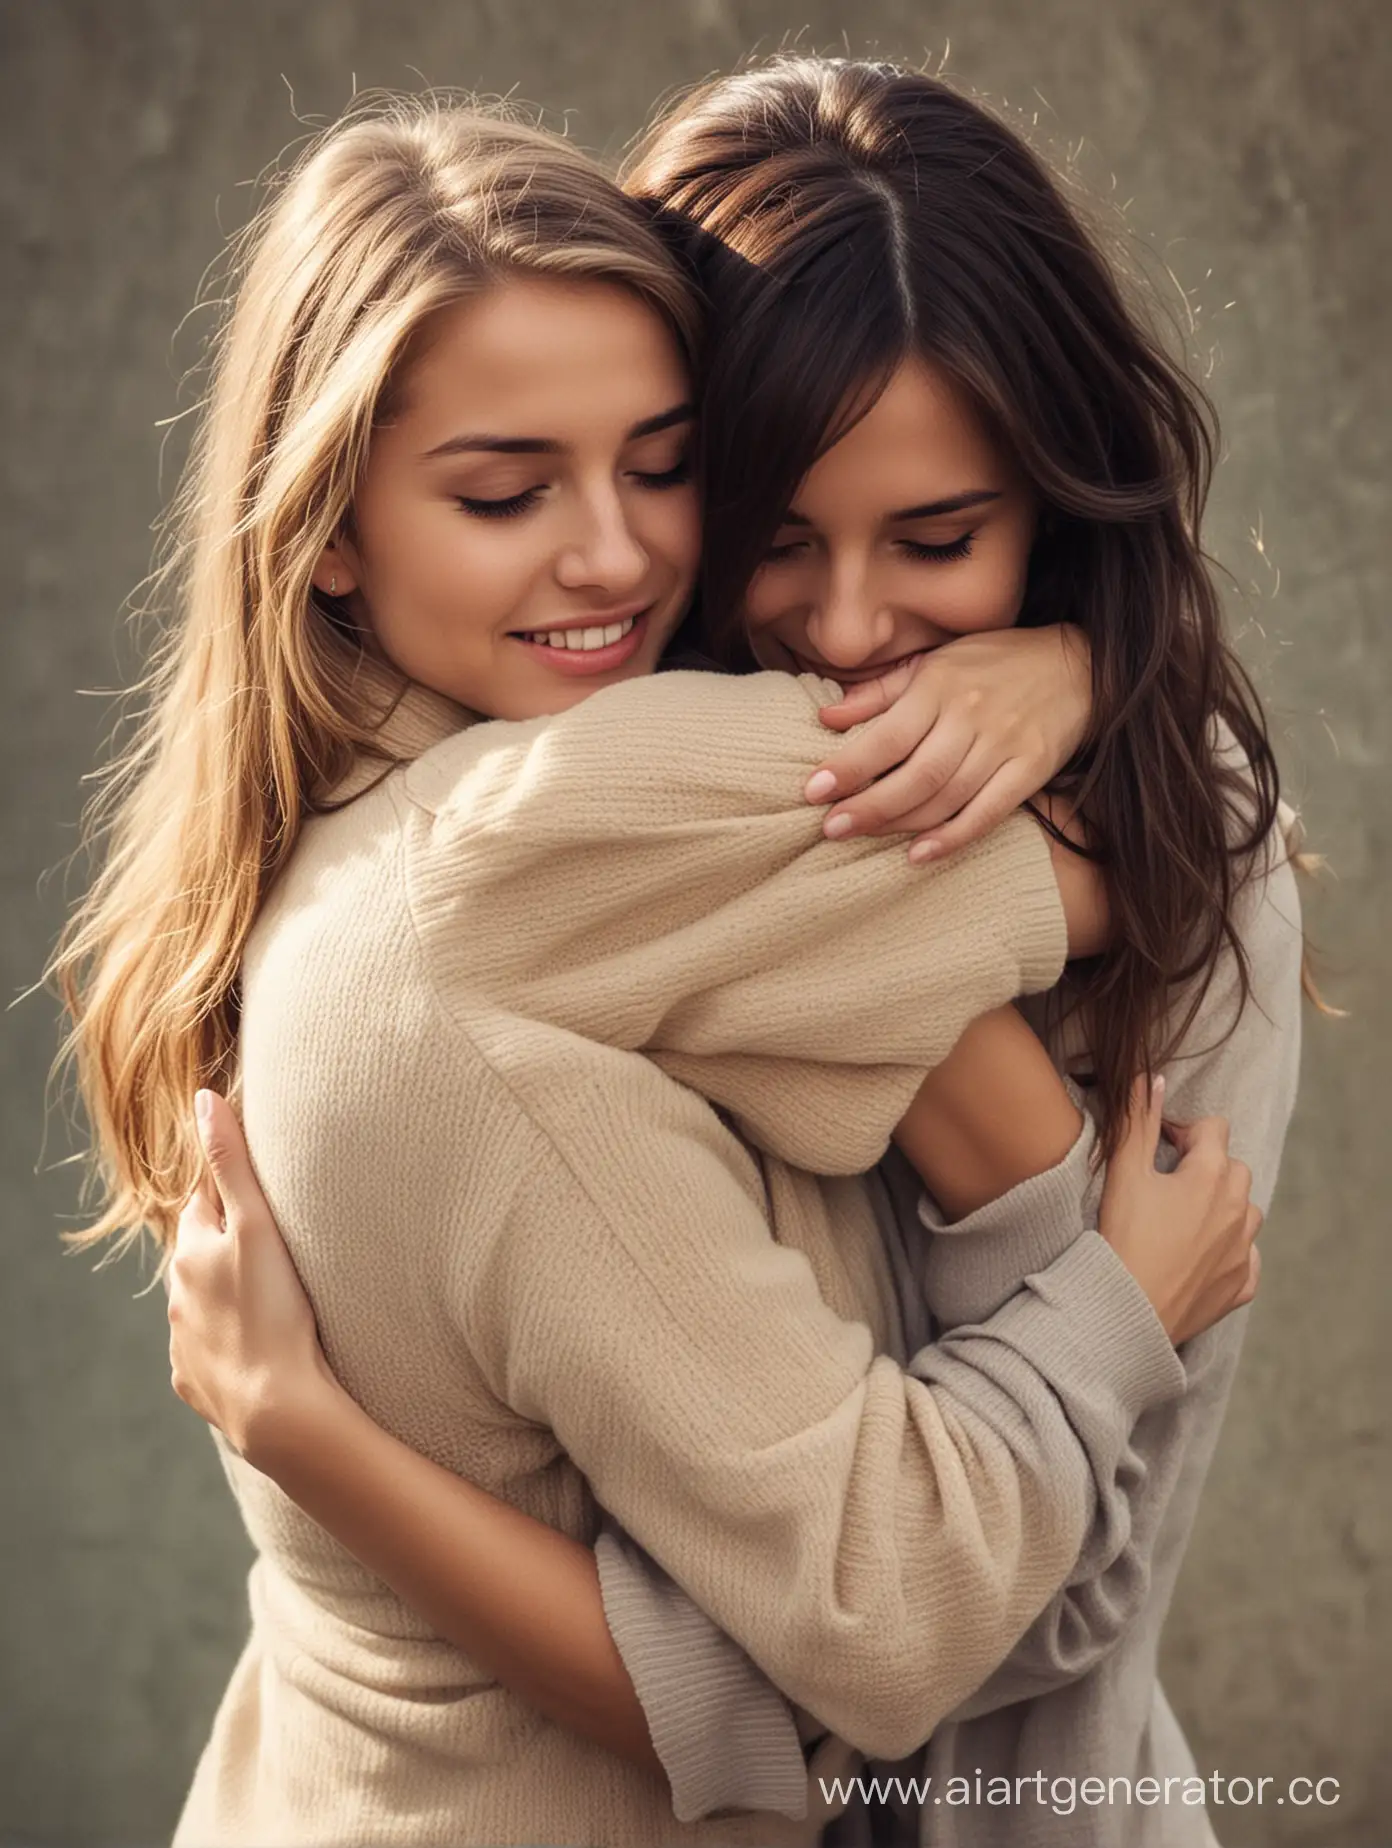 Warm-Embrace-of-Close-Friends-in-Tender-Hug